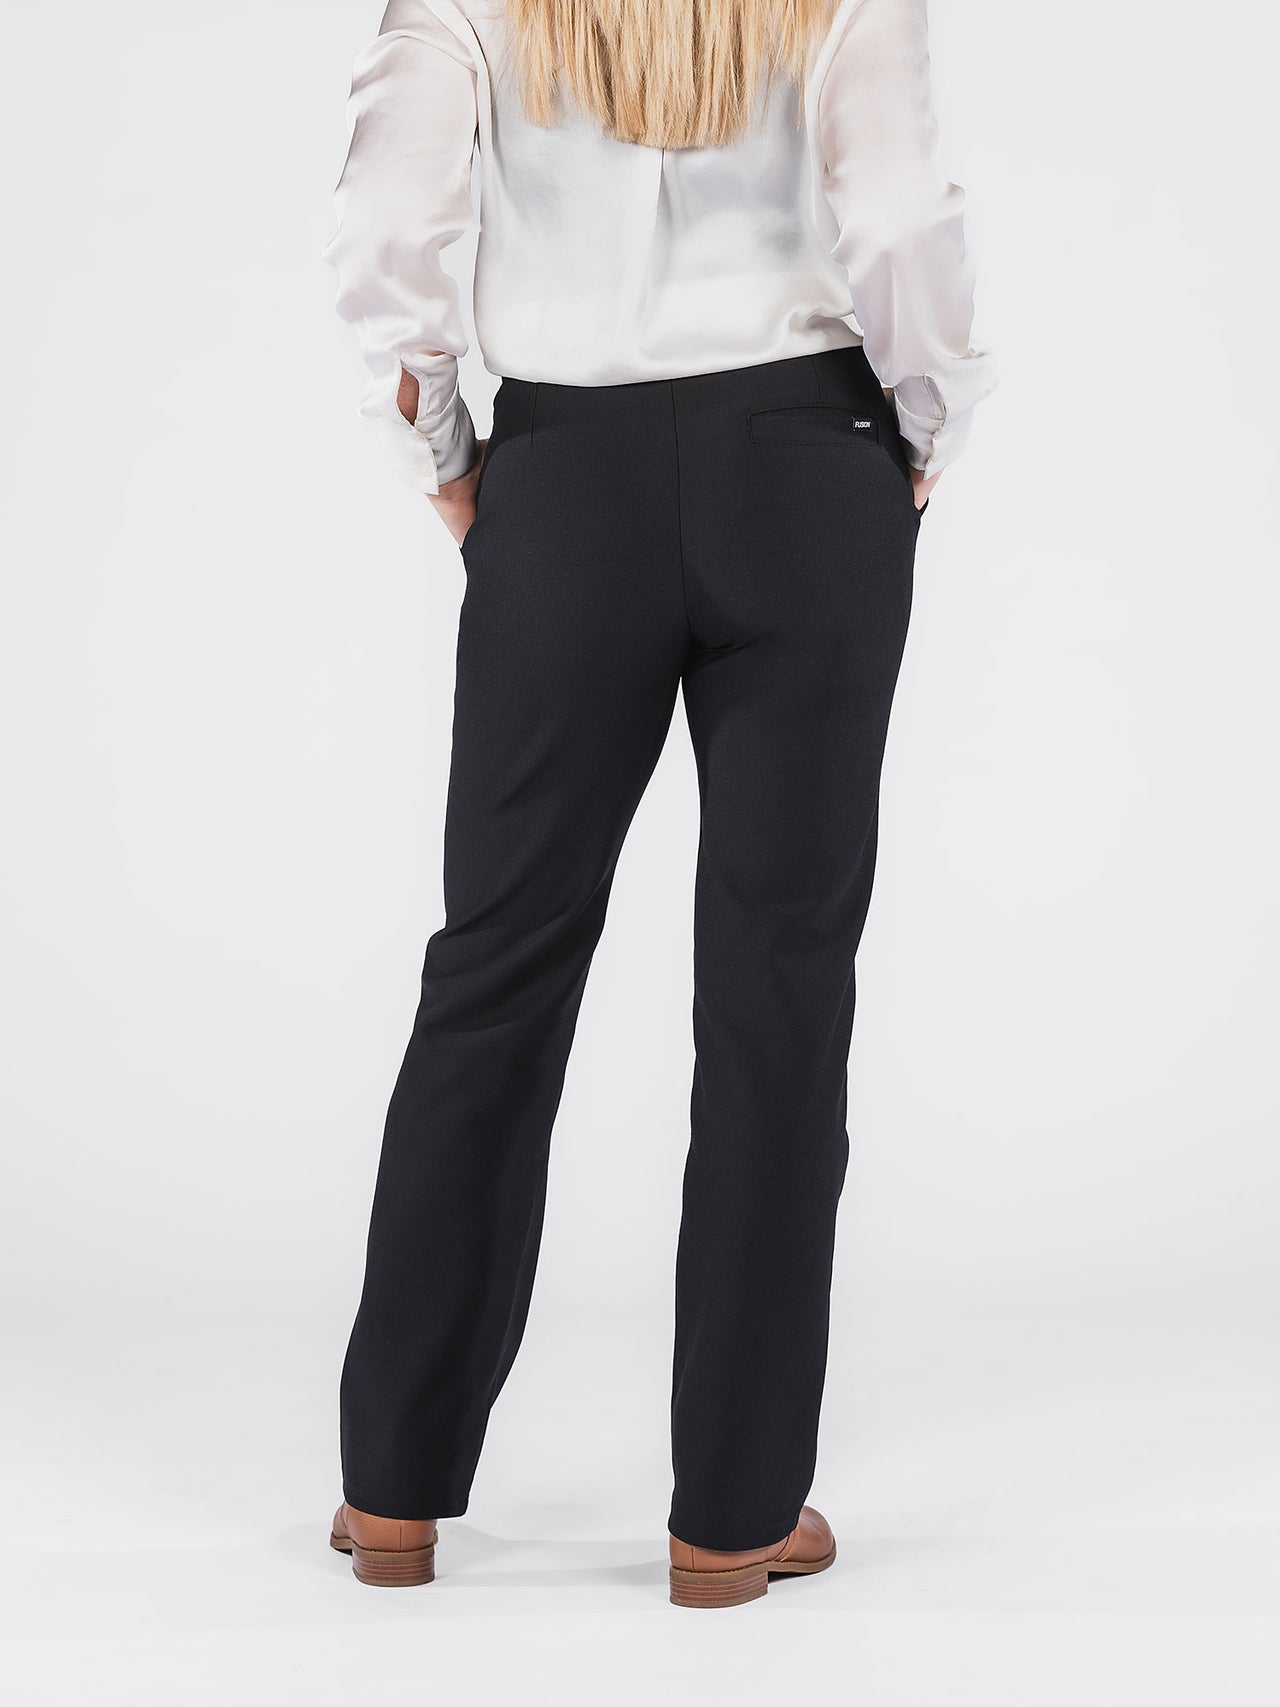 Buy Women's Linen Viscose Casual Wear Jogger Pants|Cottonworld